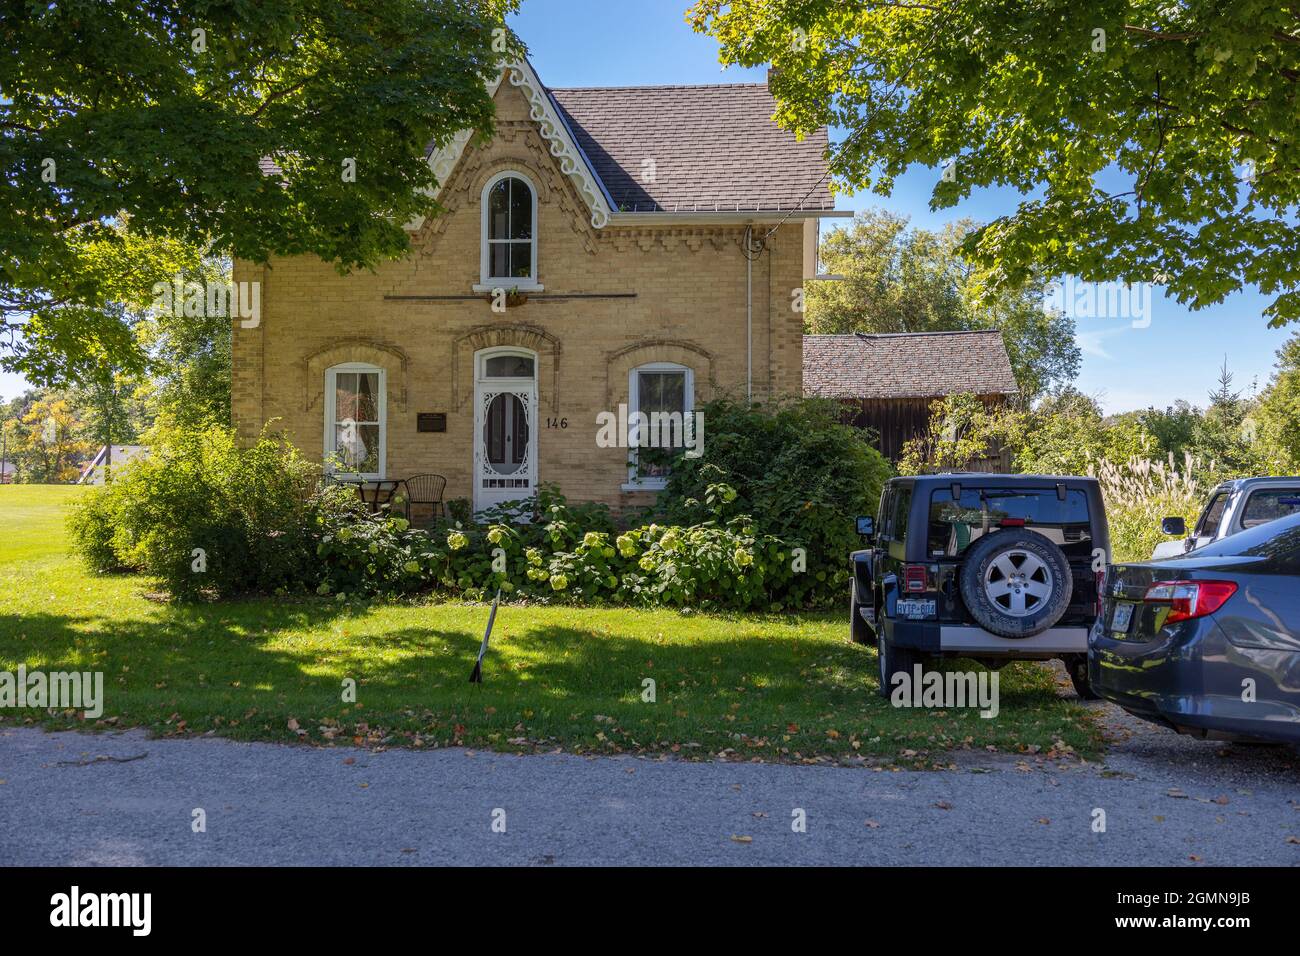 John Difenbaker House In Neustadt Ontario Canada Prime Minister Of Canada His Family Home Stock Photo